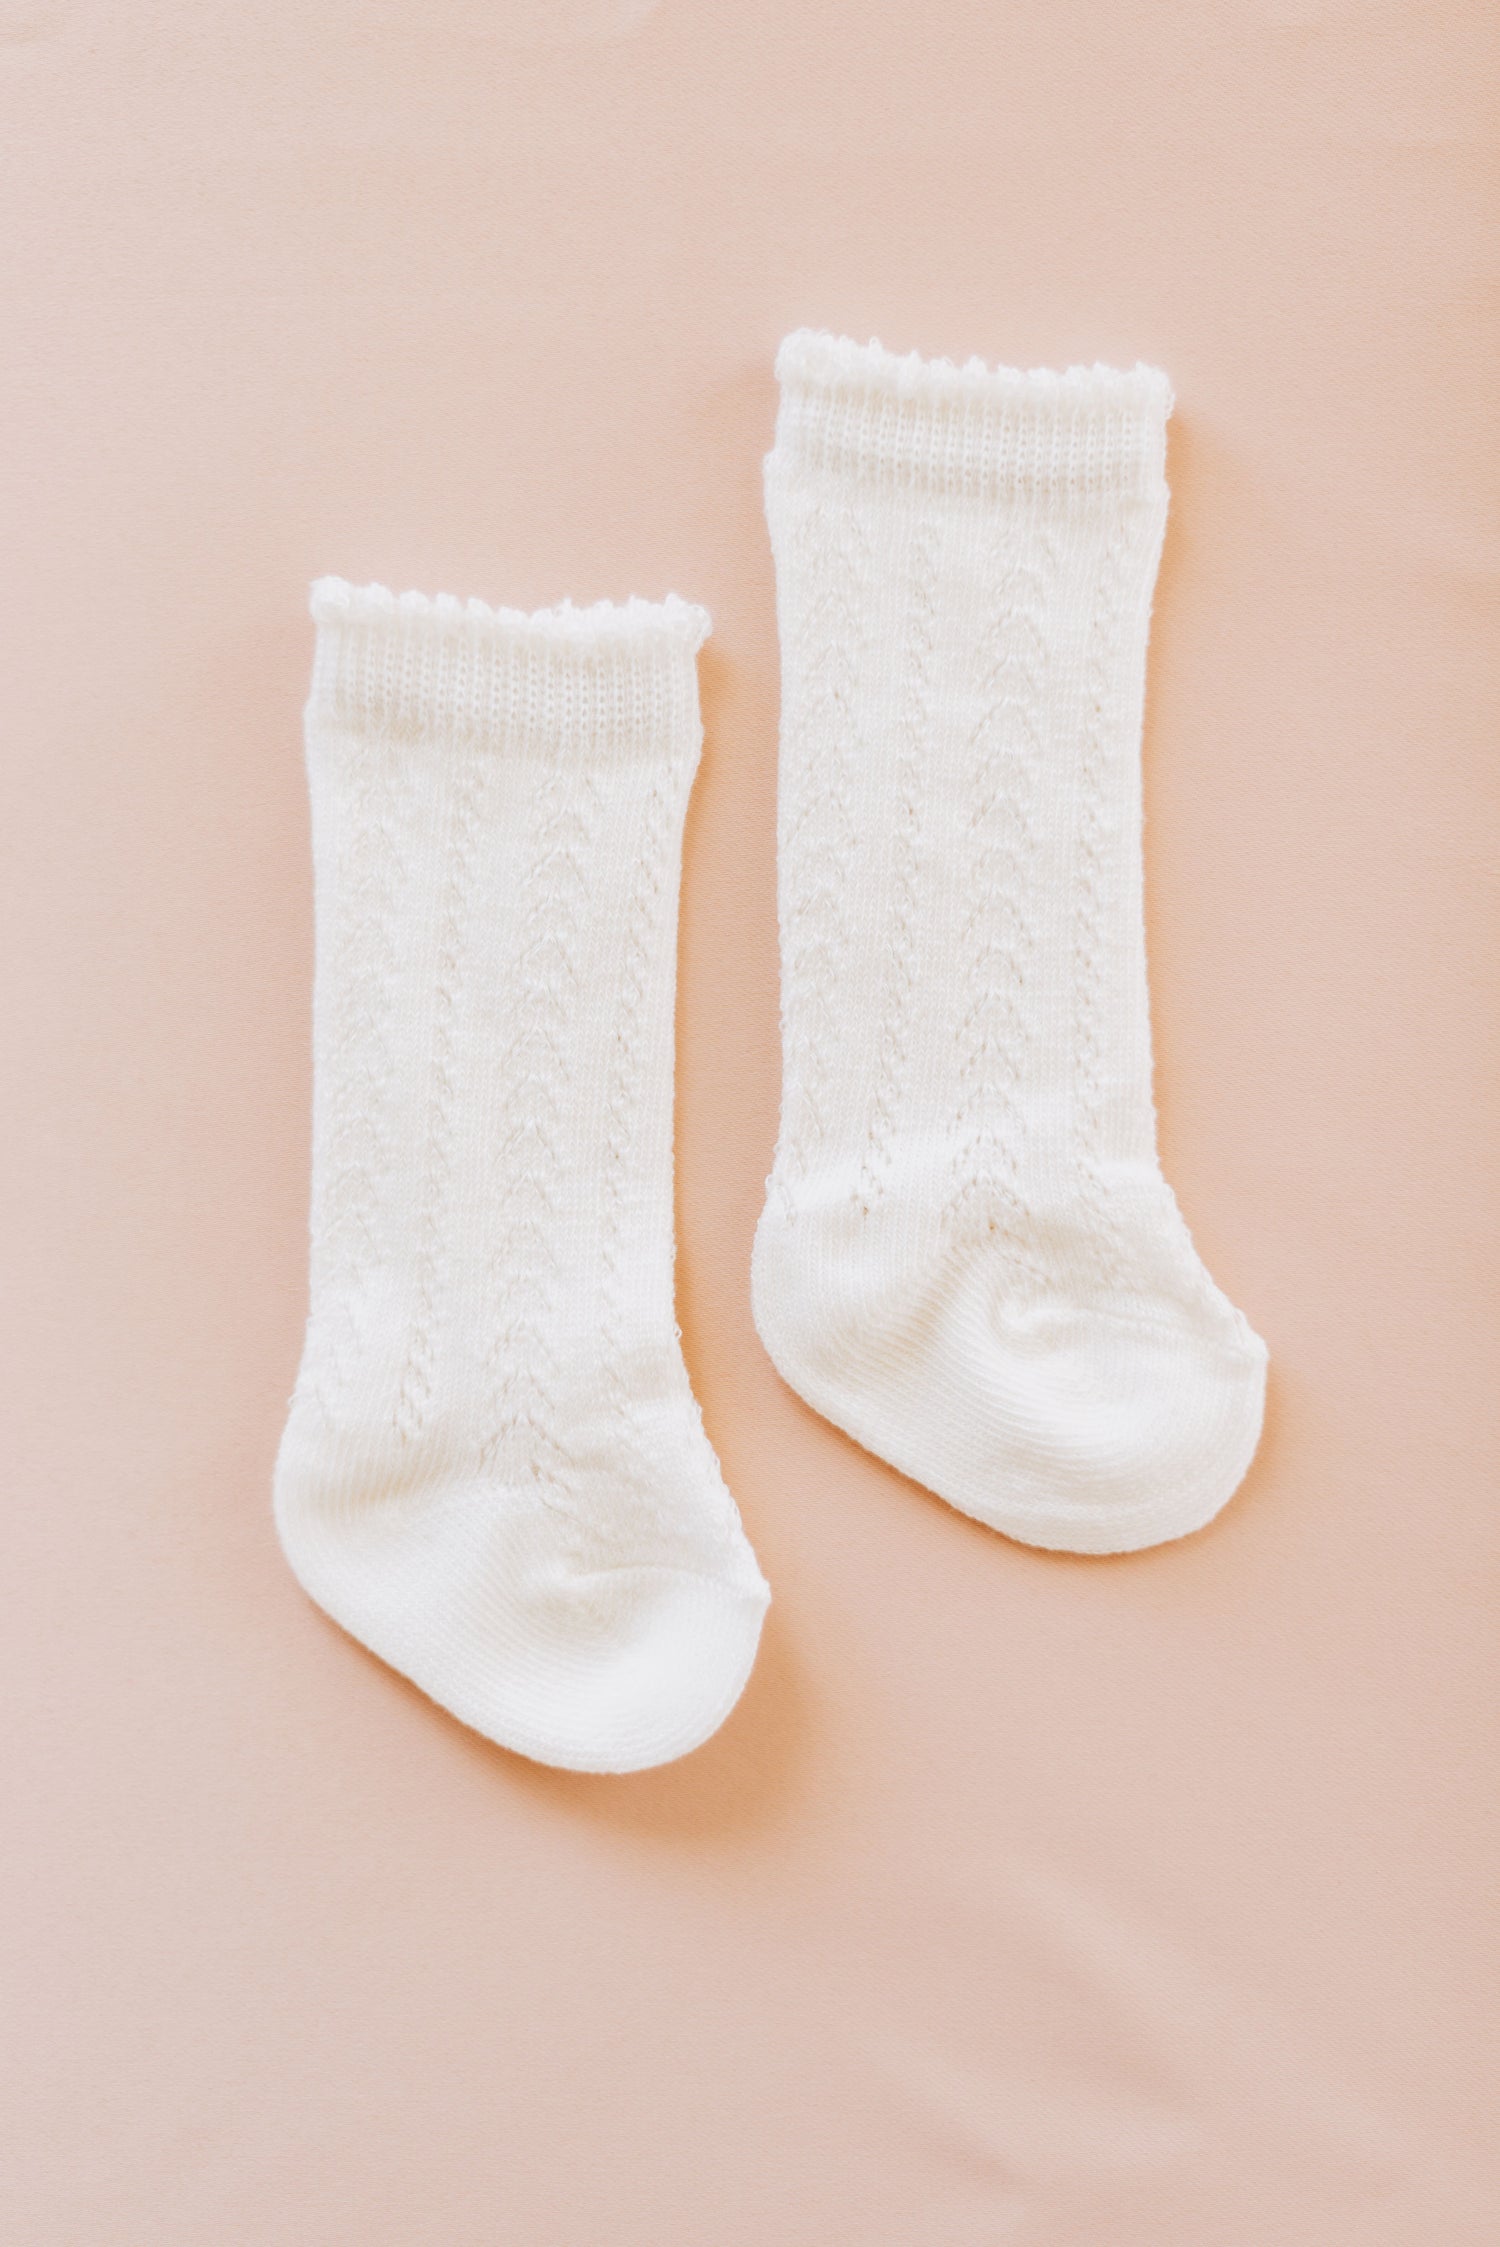 Knit white stockings